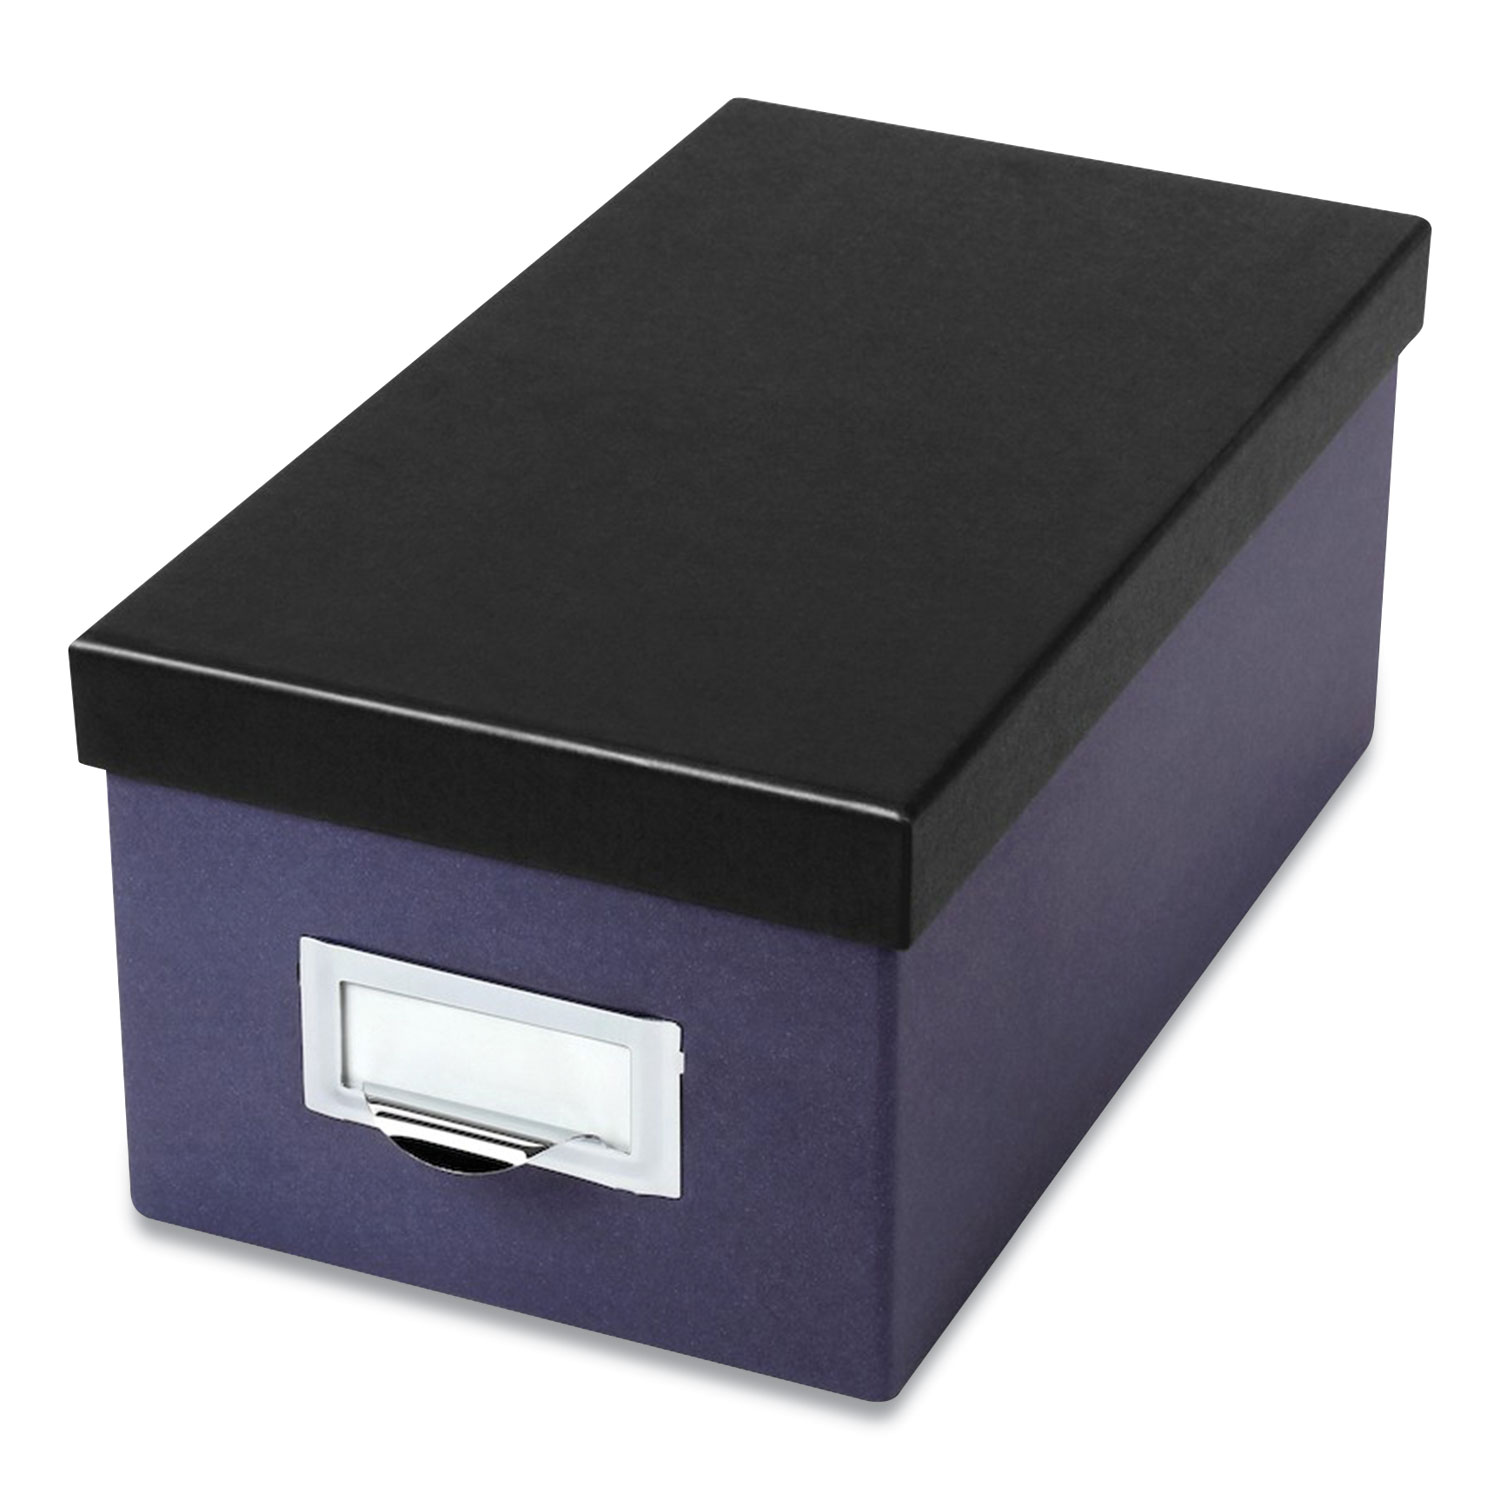 Oxford™ Index Card Storage Box, Holds 1,000 4 x 6 Cards, Pressboard, Indigo/Black, 6.5 x 11.5 x 5